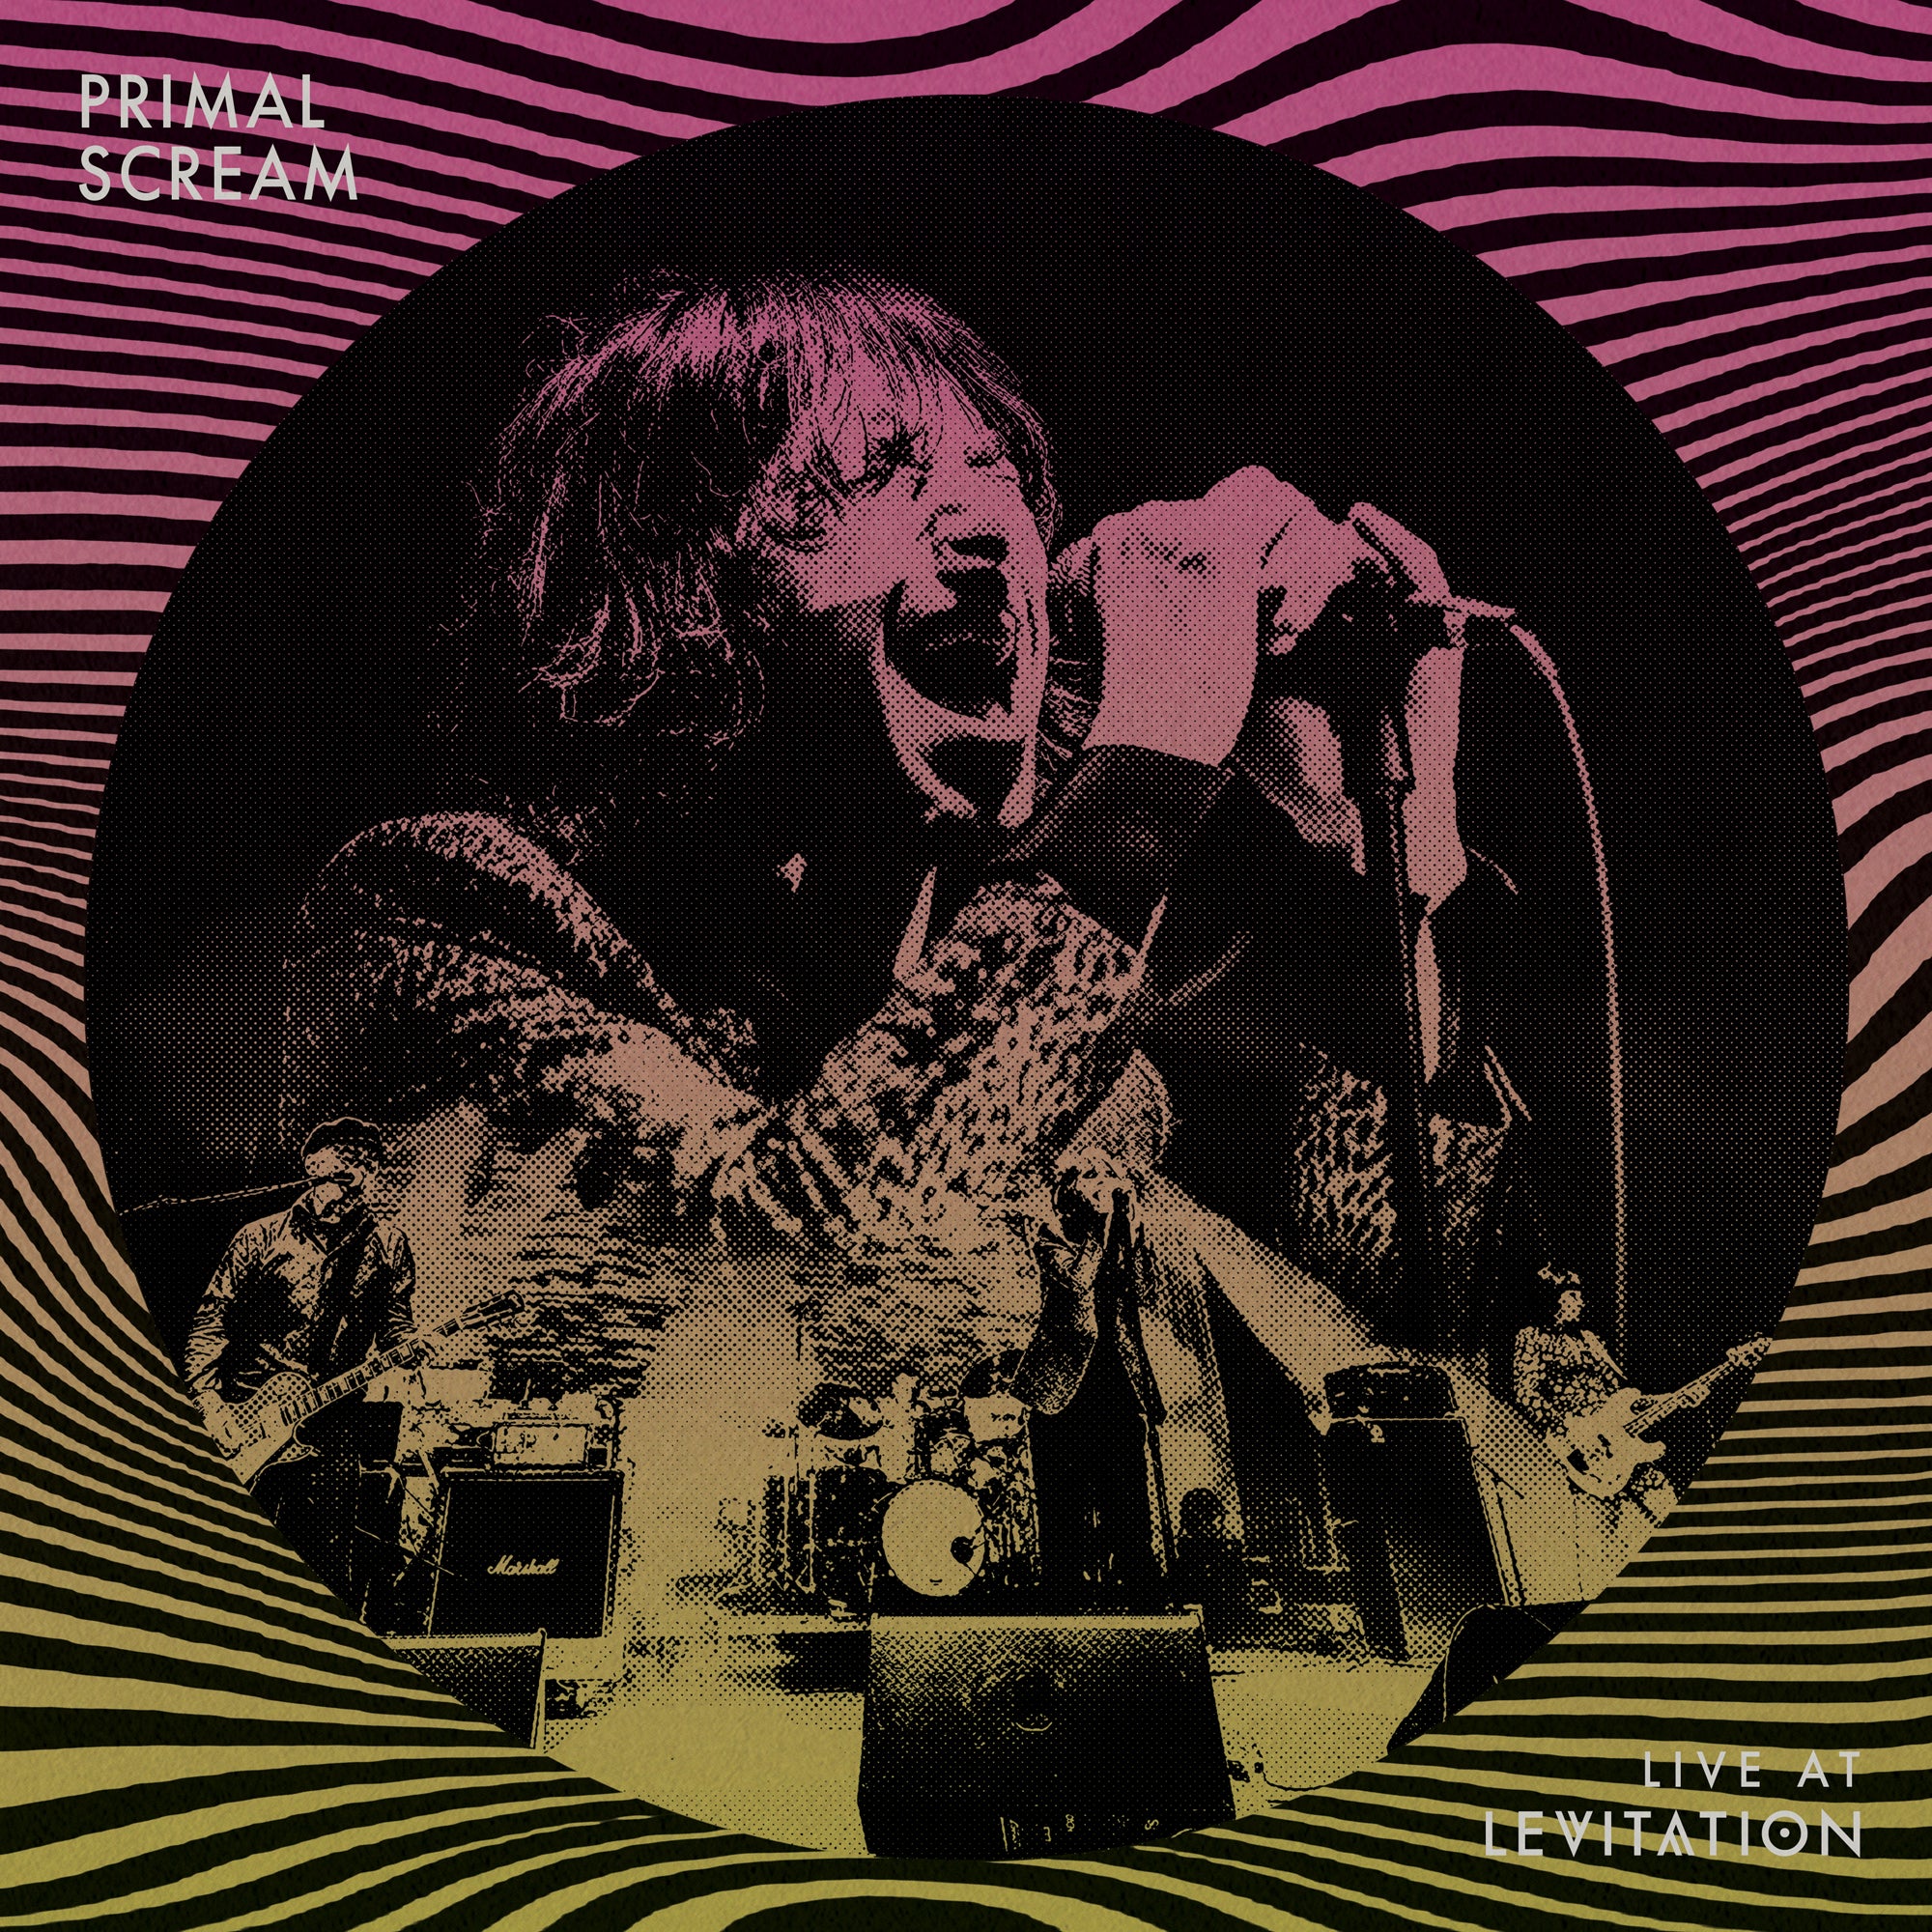 primal scream - live at levitation - album cover - pink, yellow, black